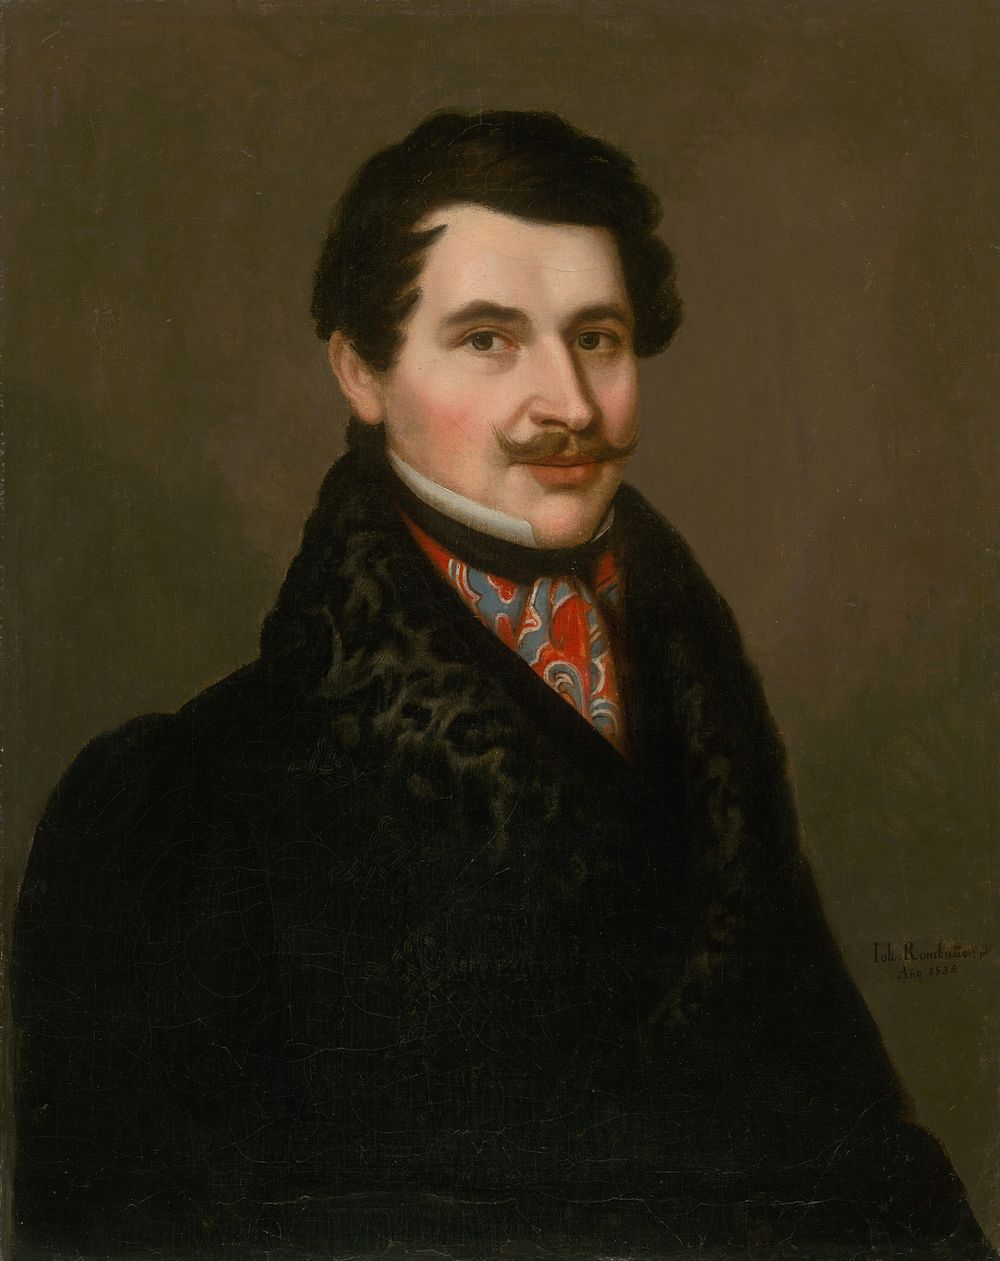 Portrait of a man in a fur collar